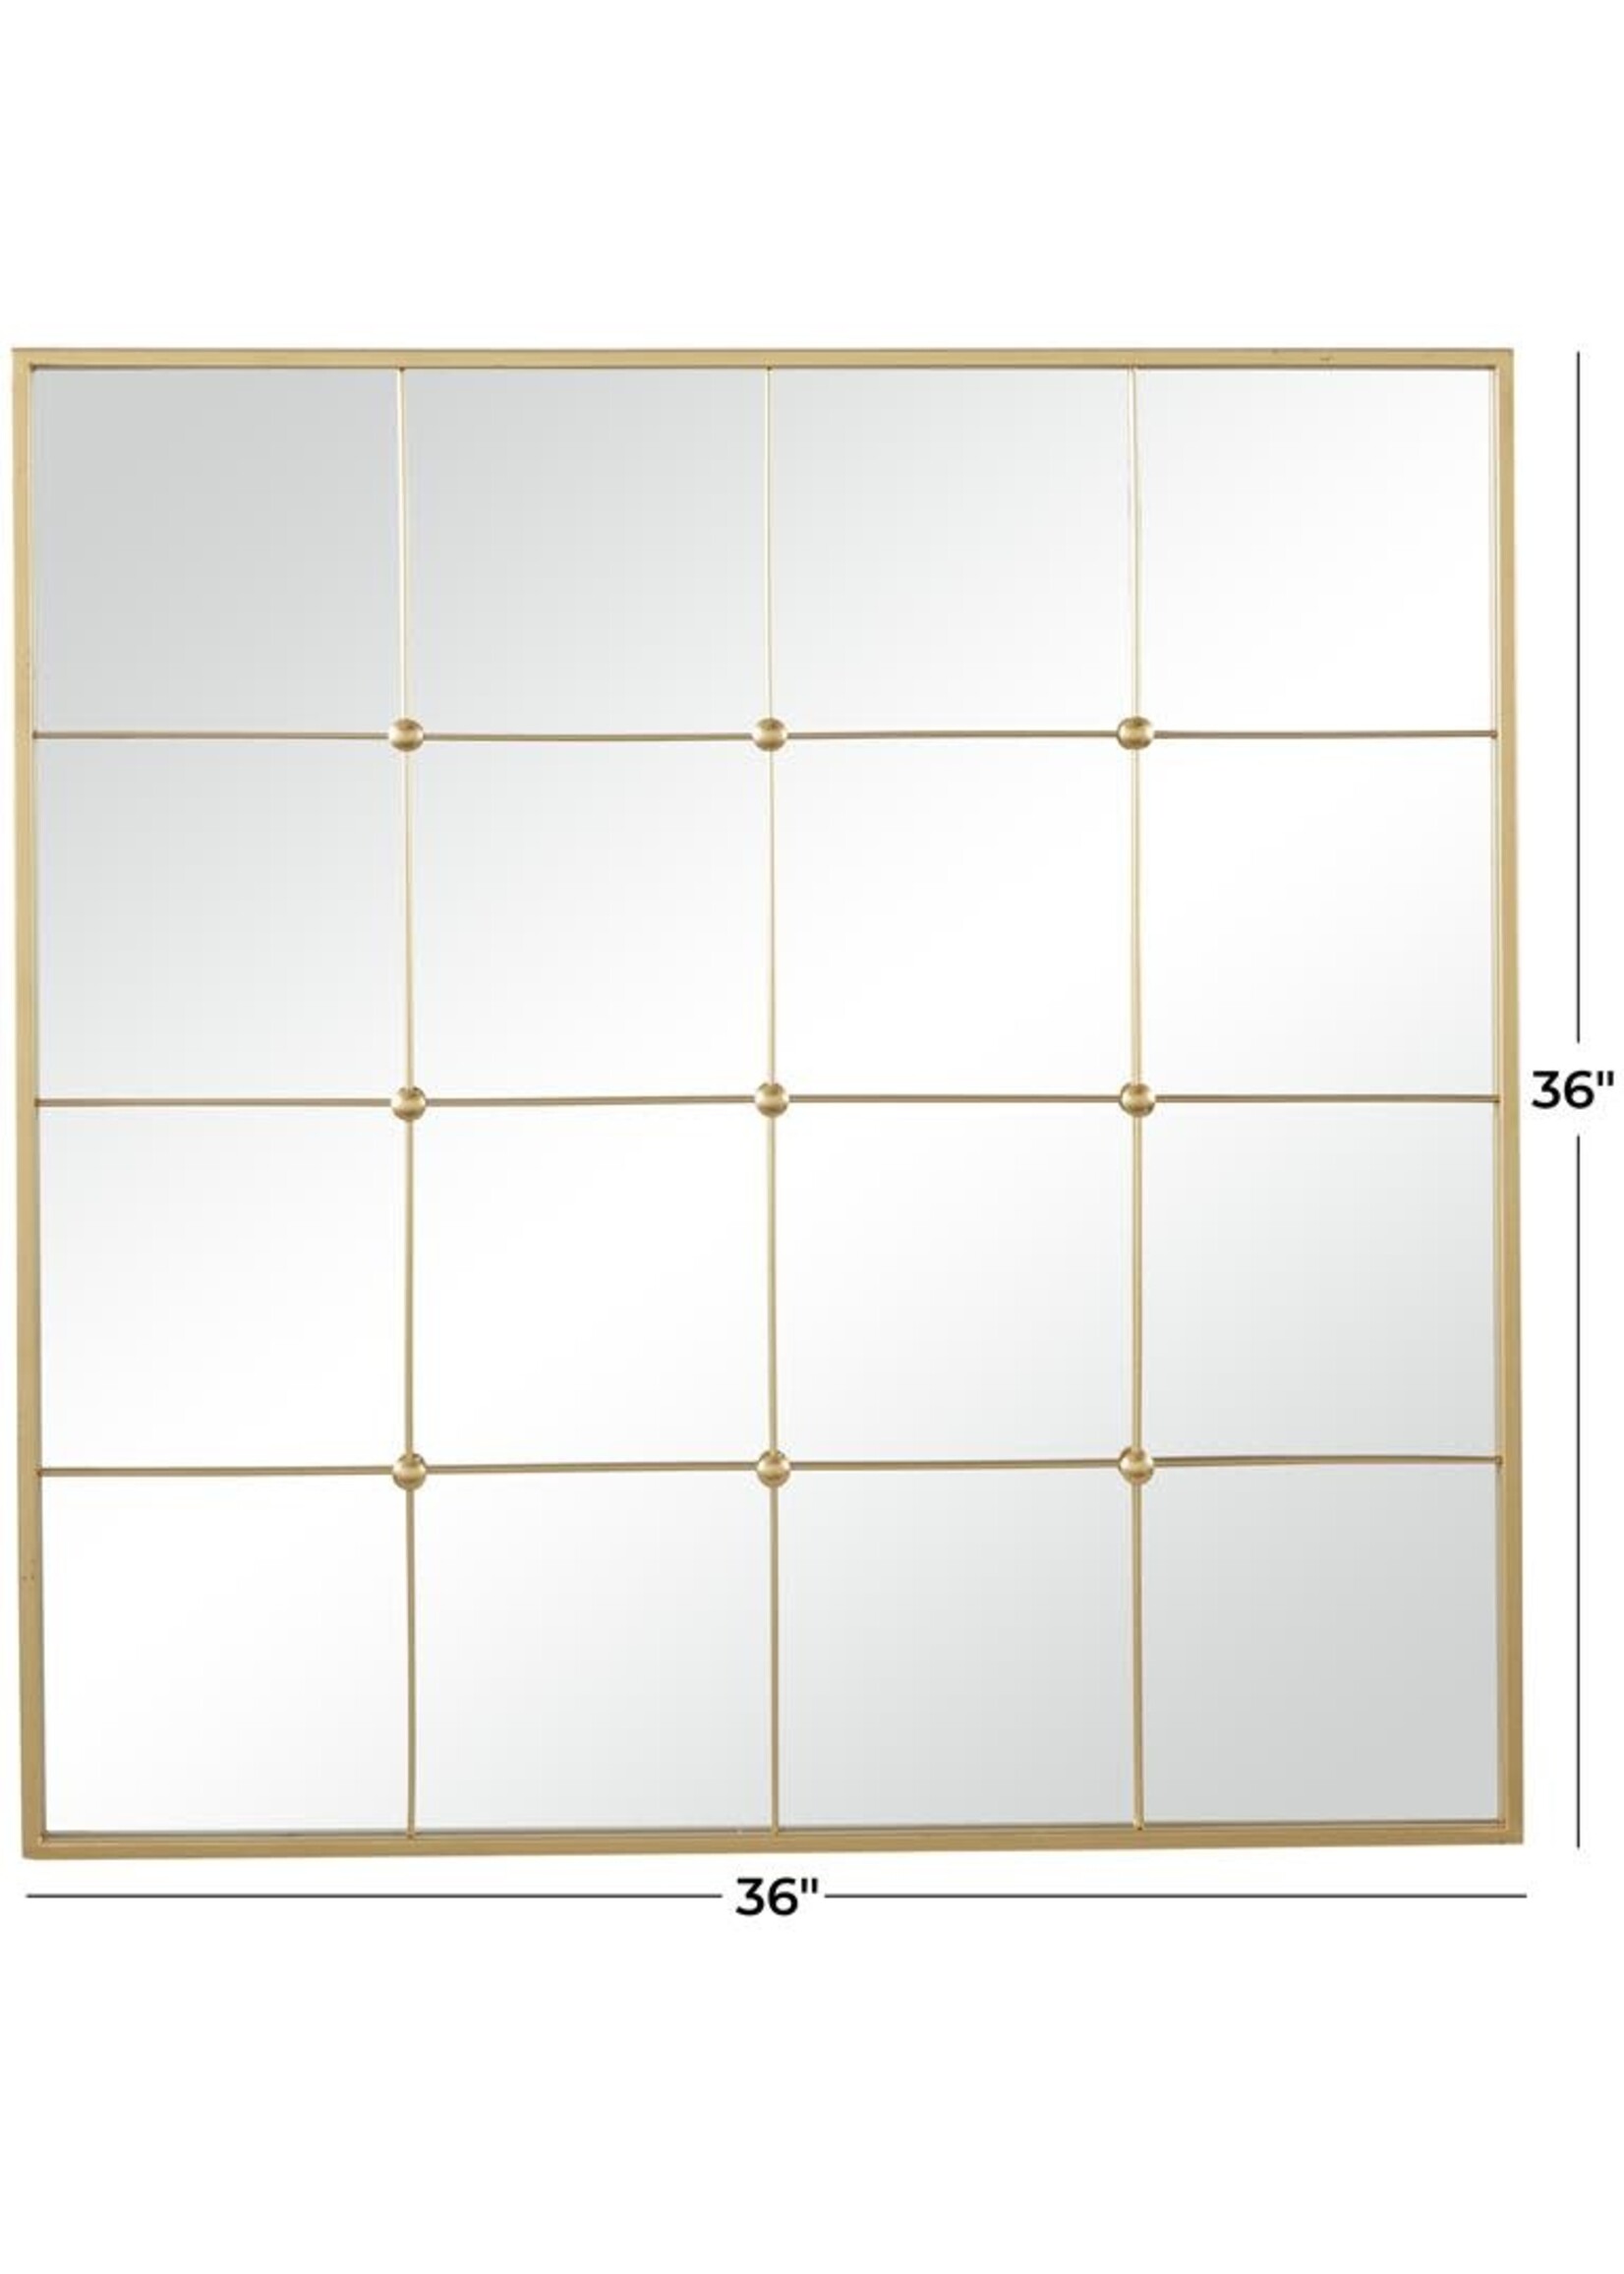 UMA Enterprises 24456 Gold Metal Window Pane Wall Mirror 36"x1"x36"